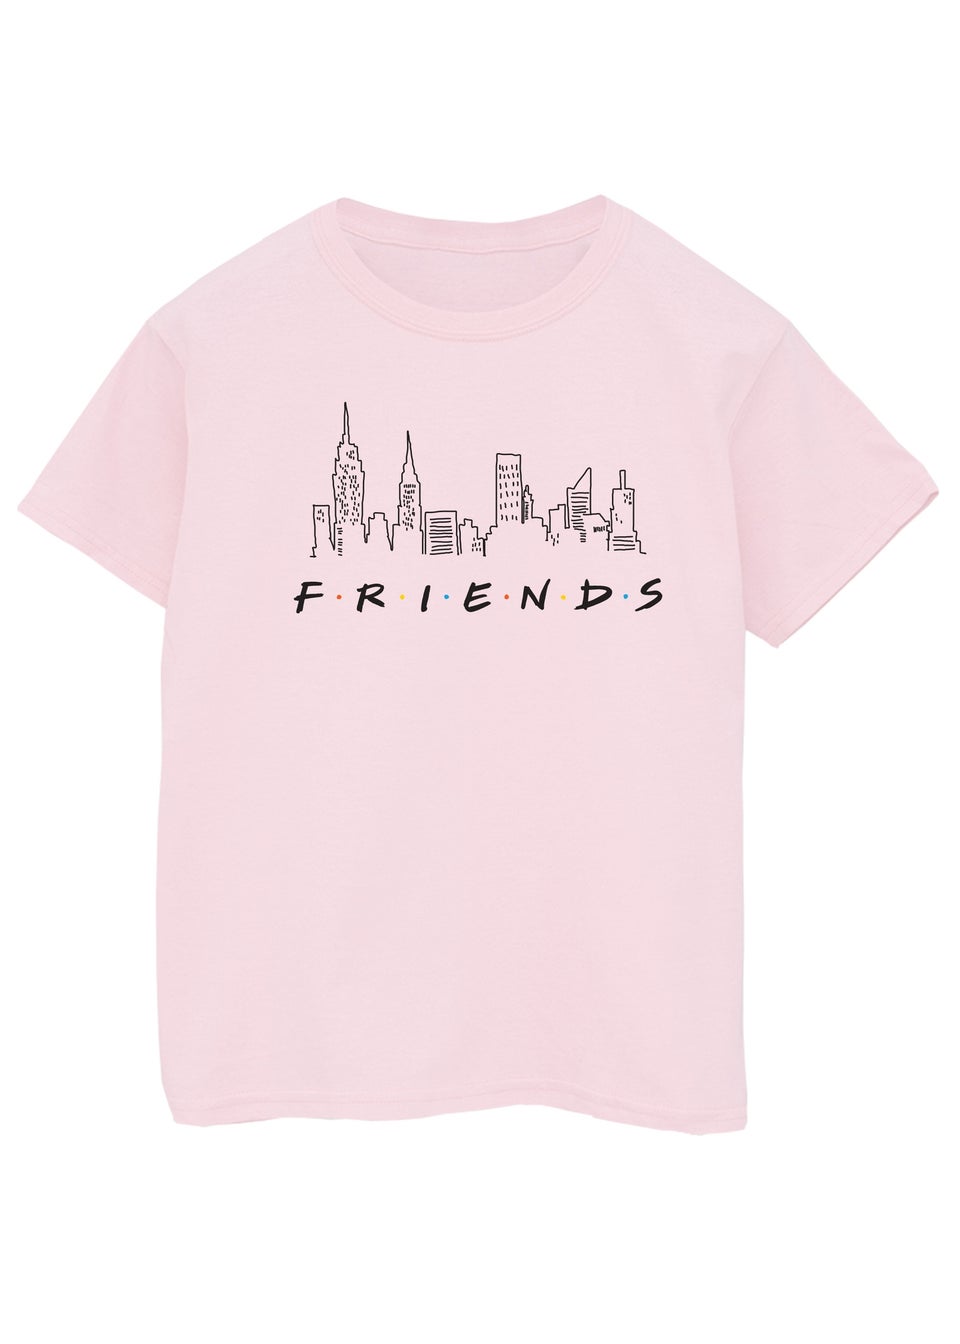 Friends Kids Baby Pink Skyline Printed T-Shirt (3-13 yrs)